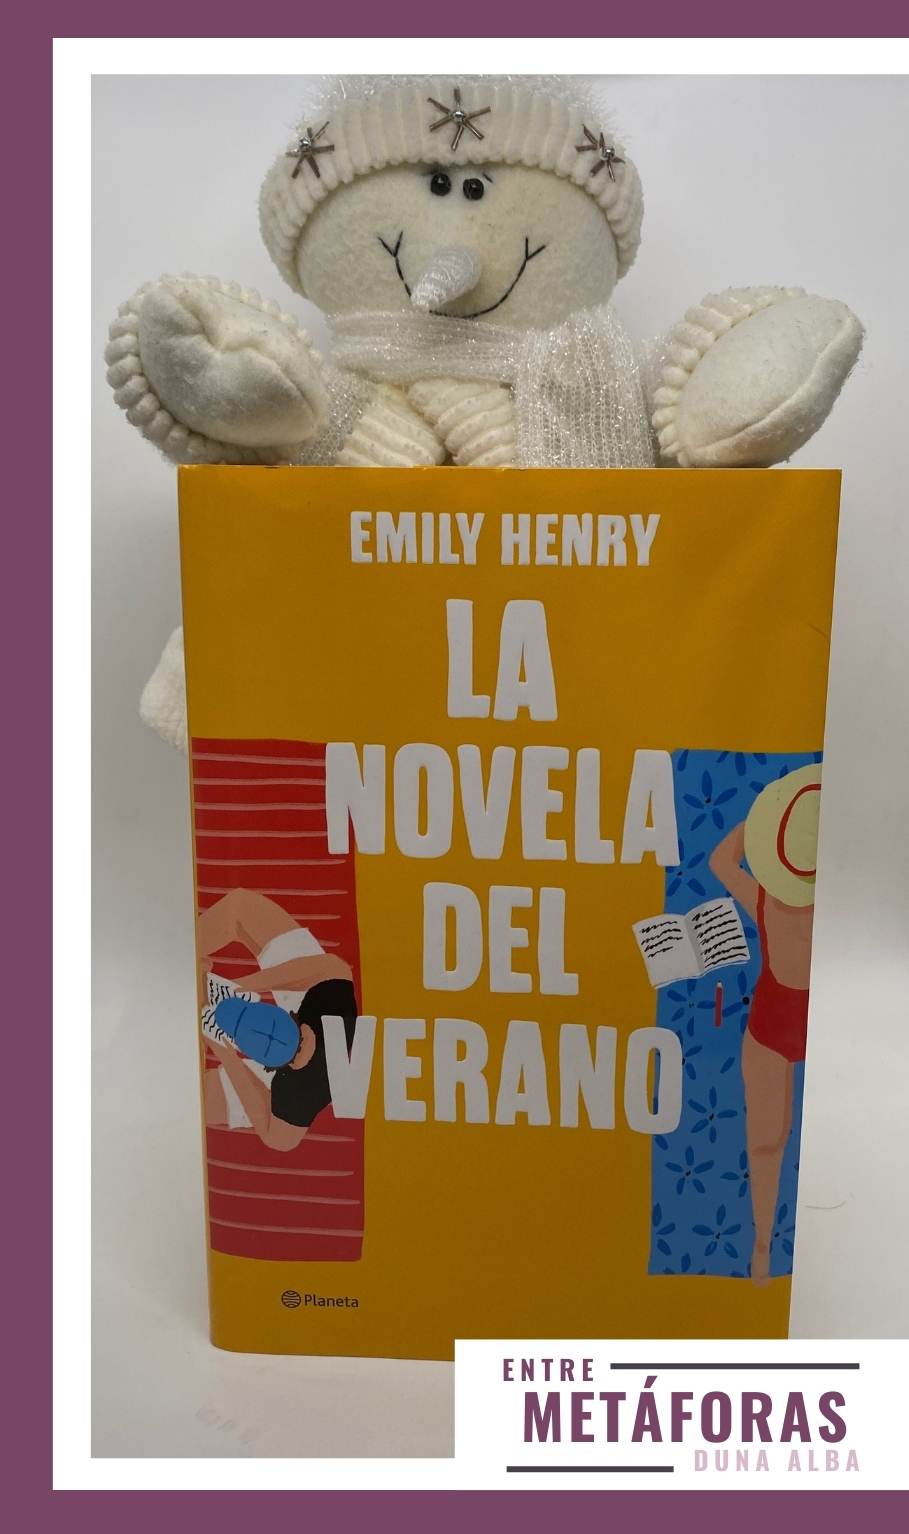 La novela del verano, de Emily Henry